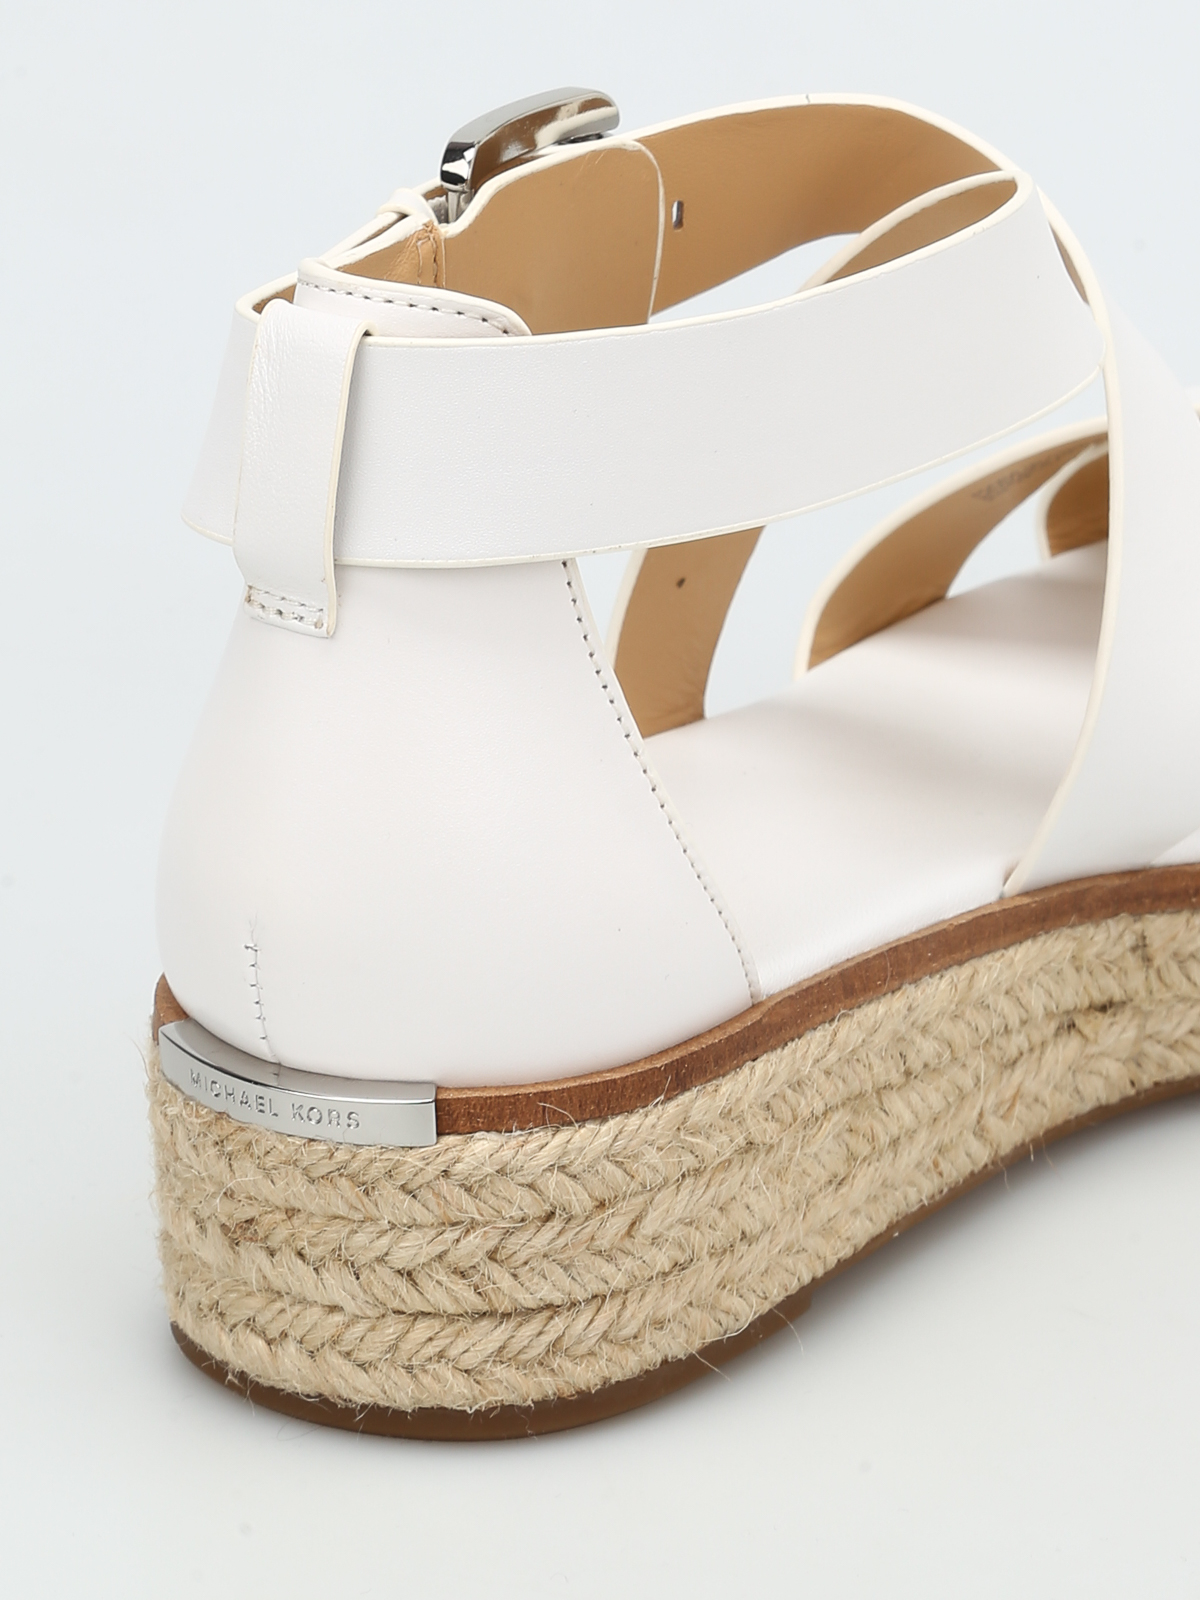 Designer Sandals  Michael Kors